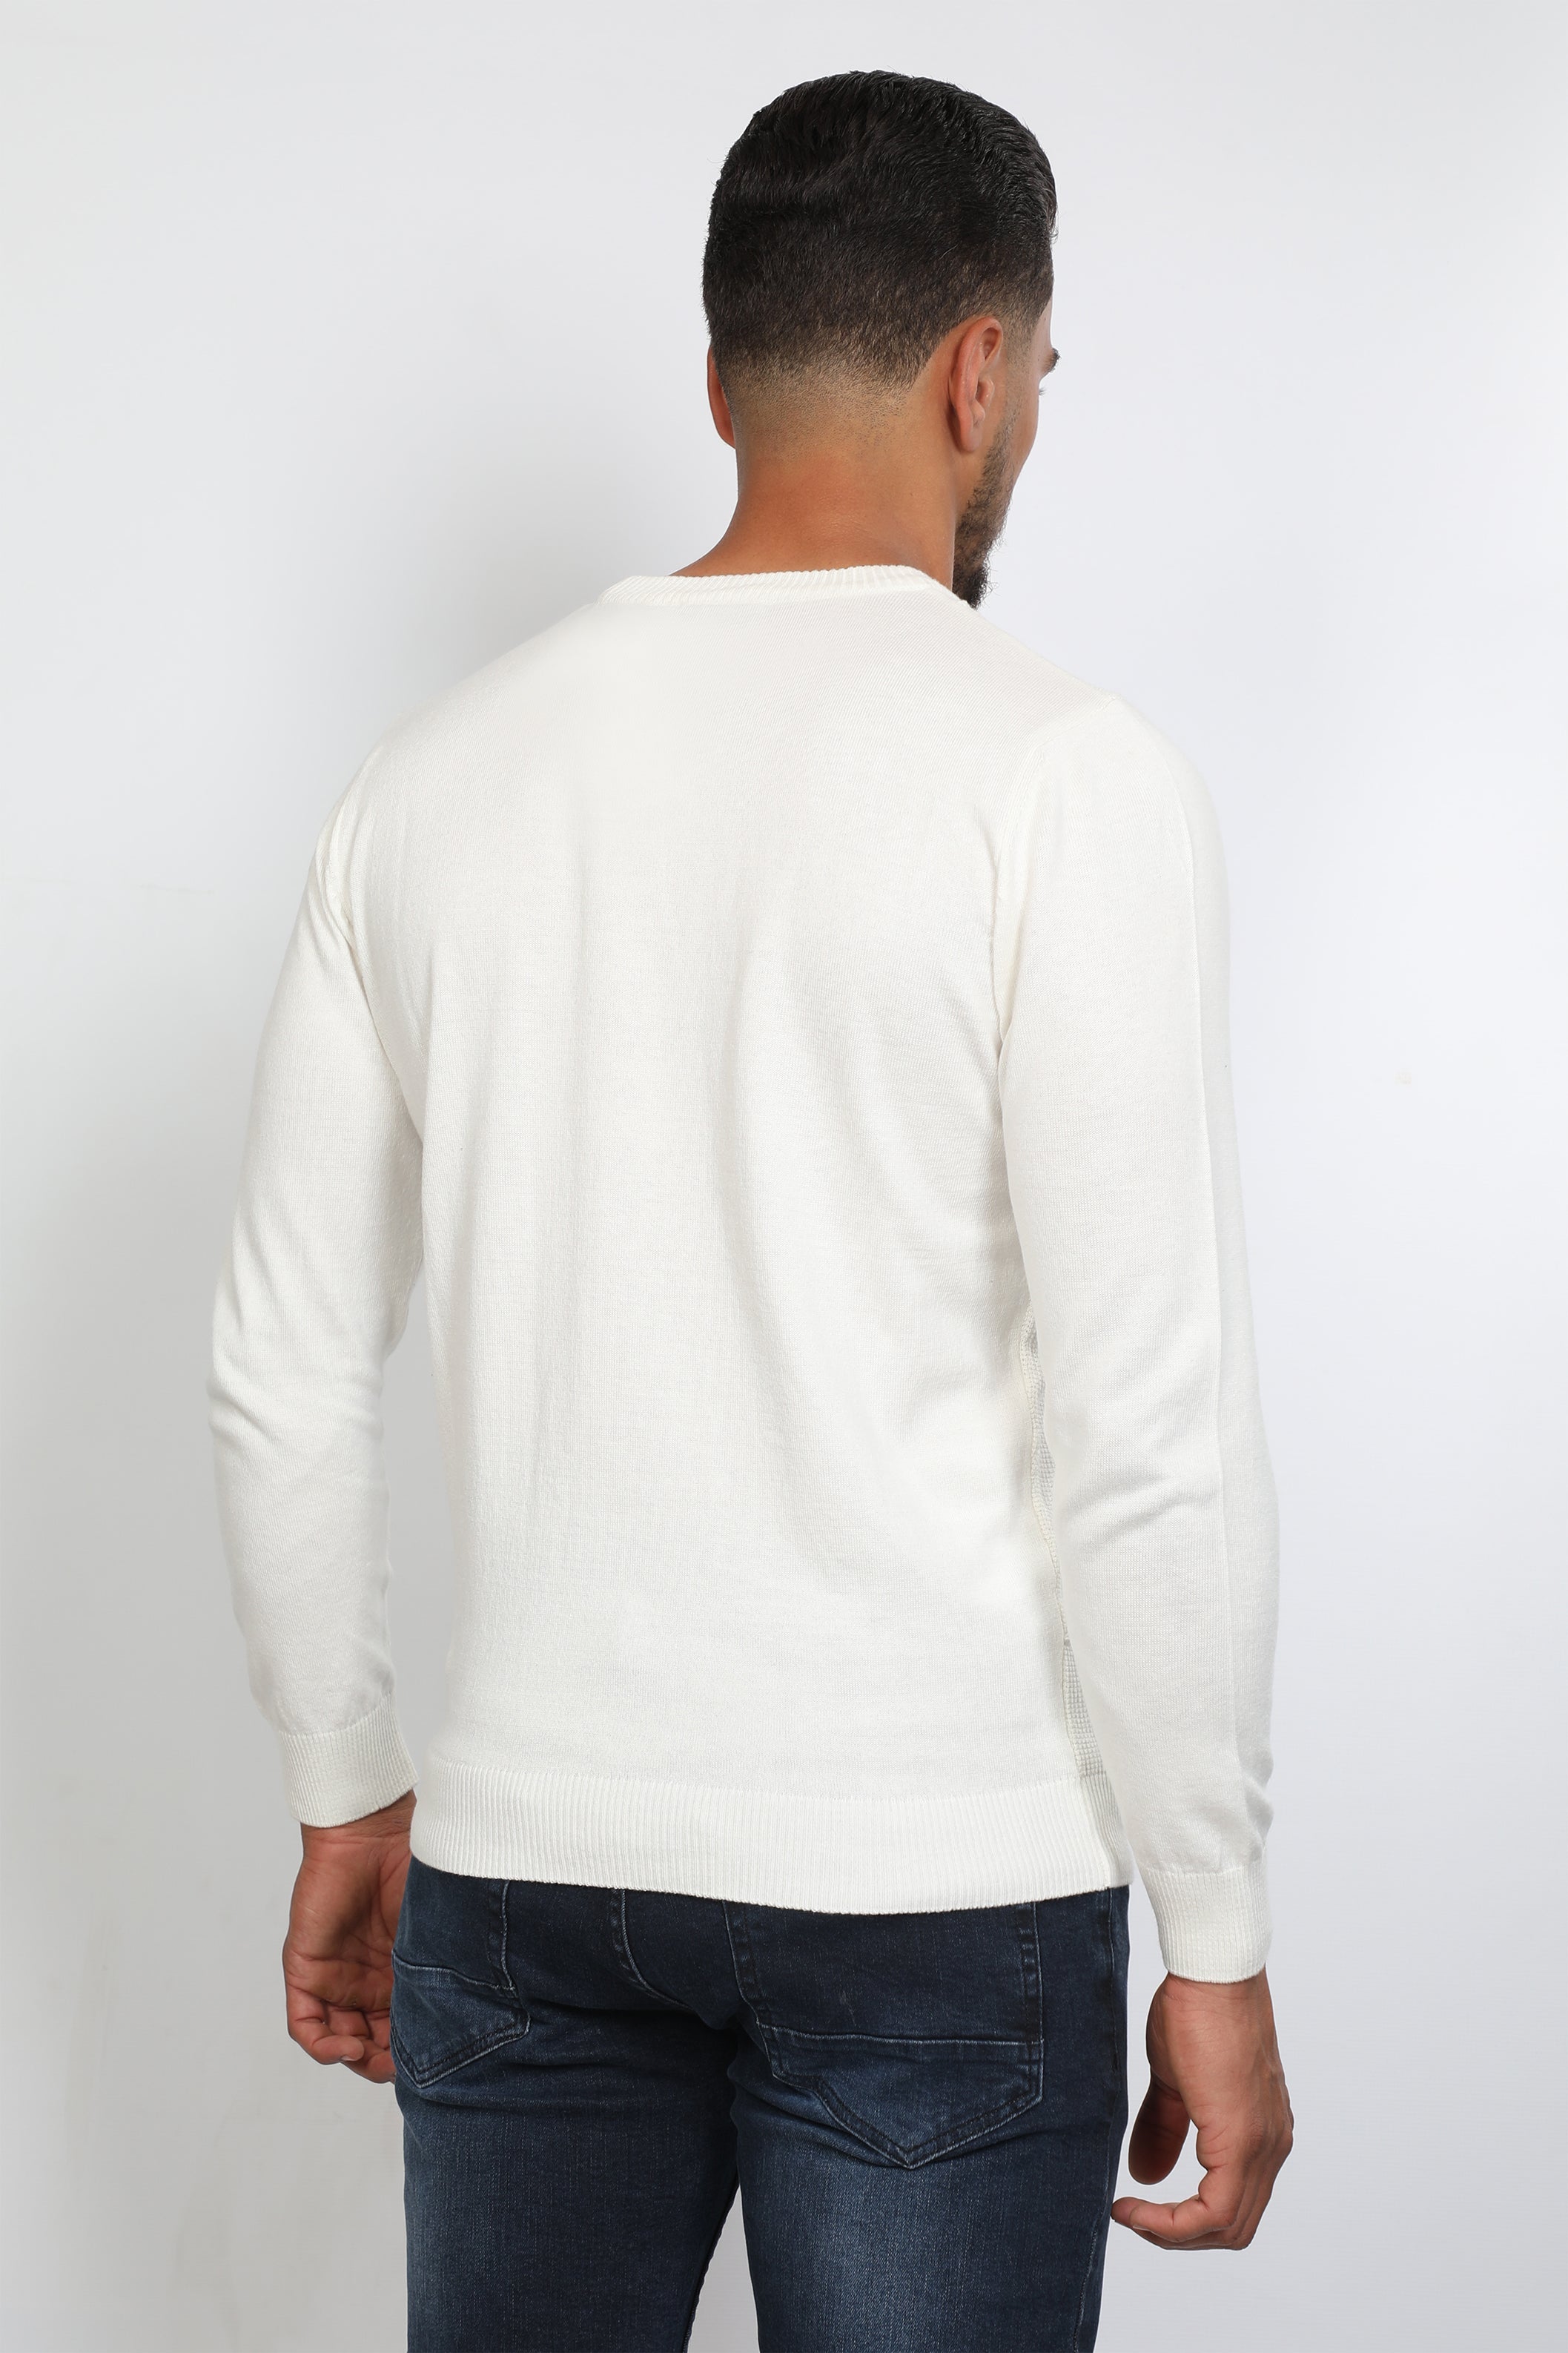 Men Lined Designed White Sweater